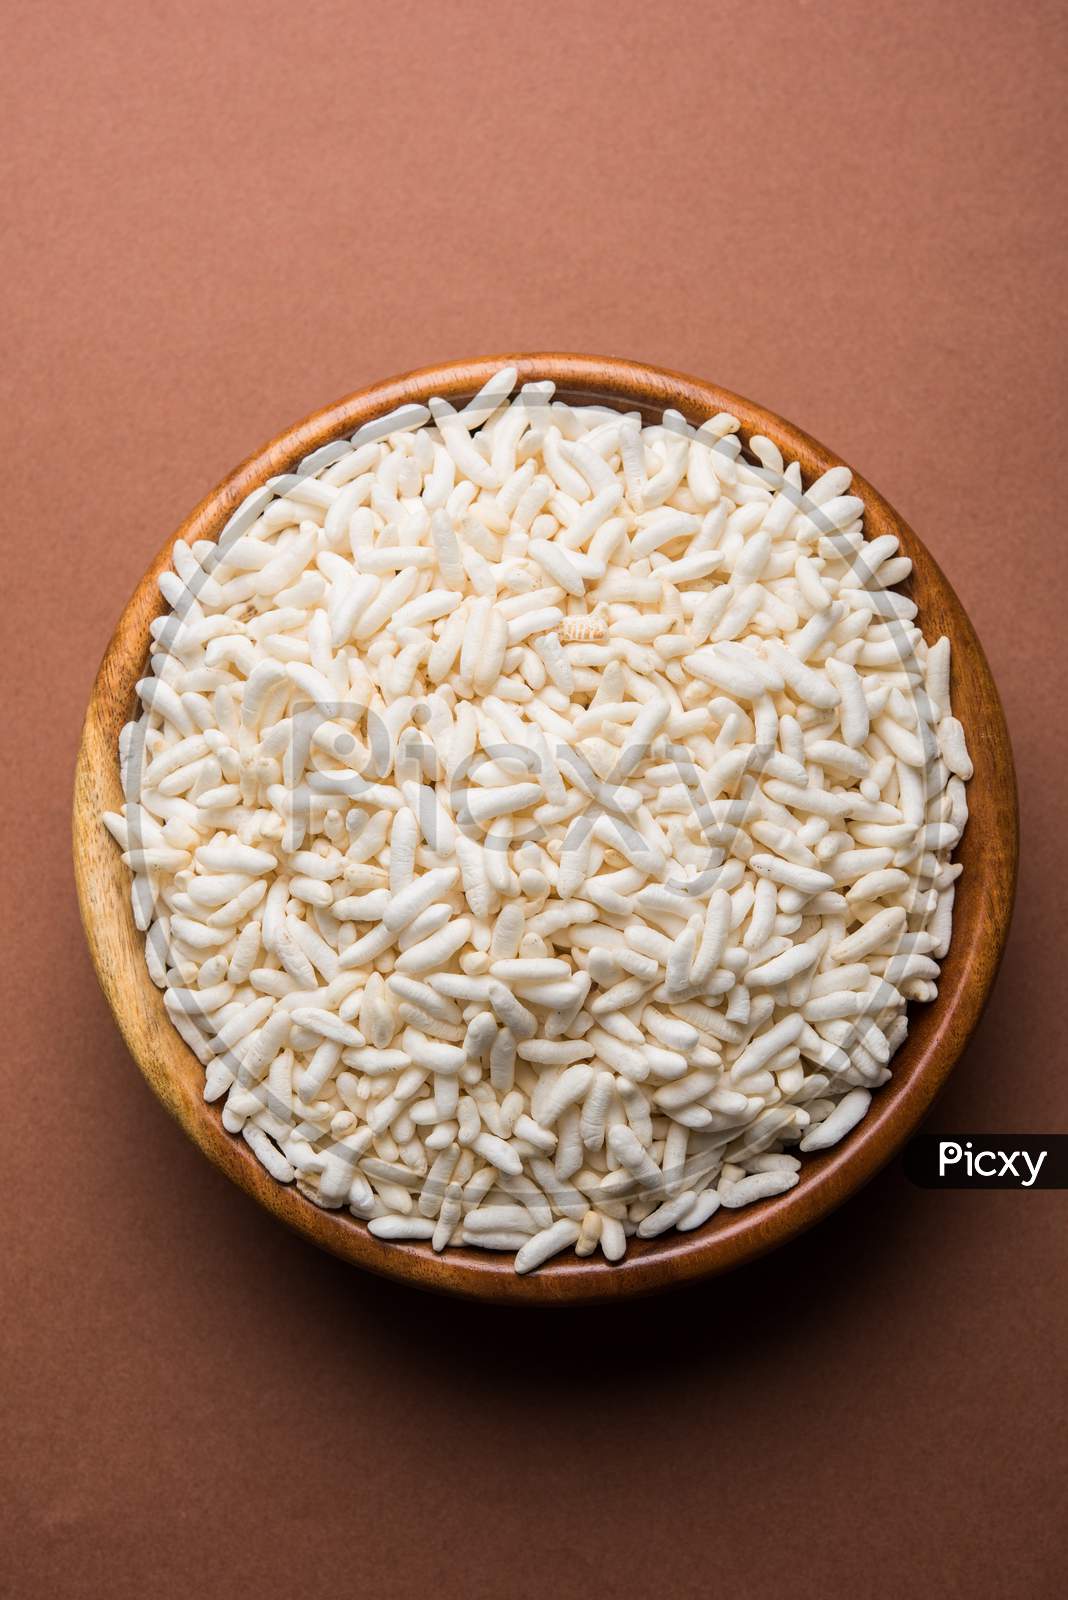 Puffed rice or Murmure